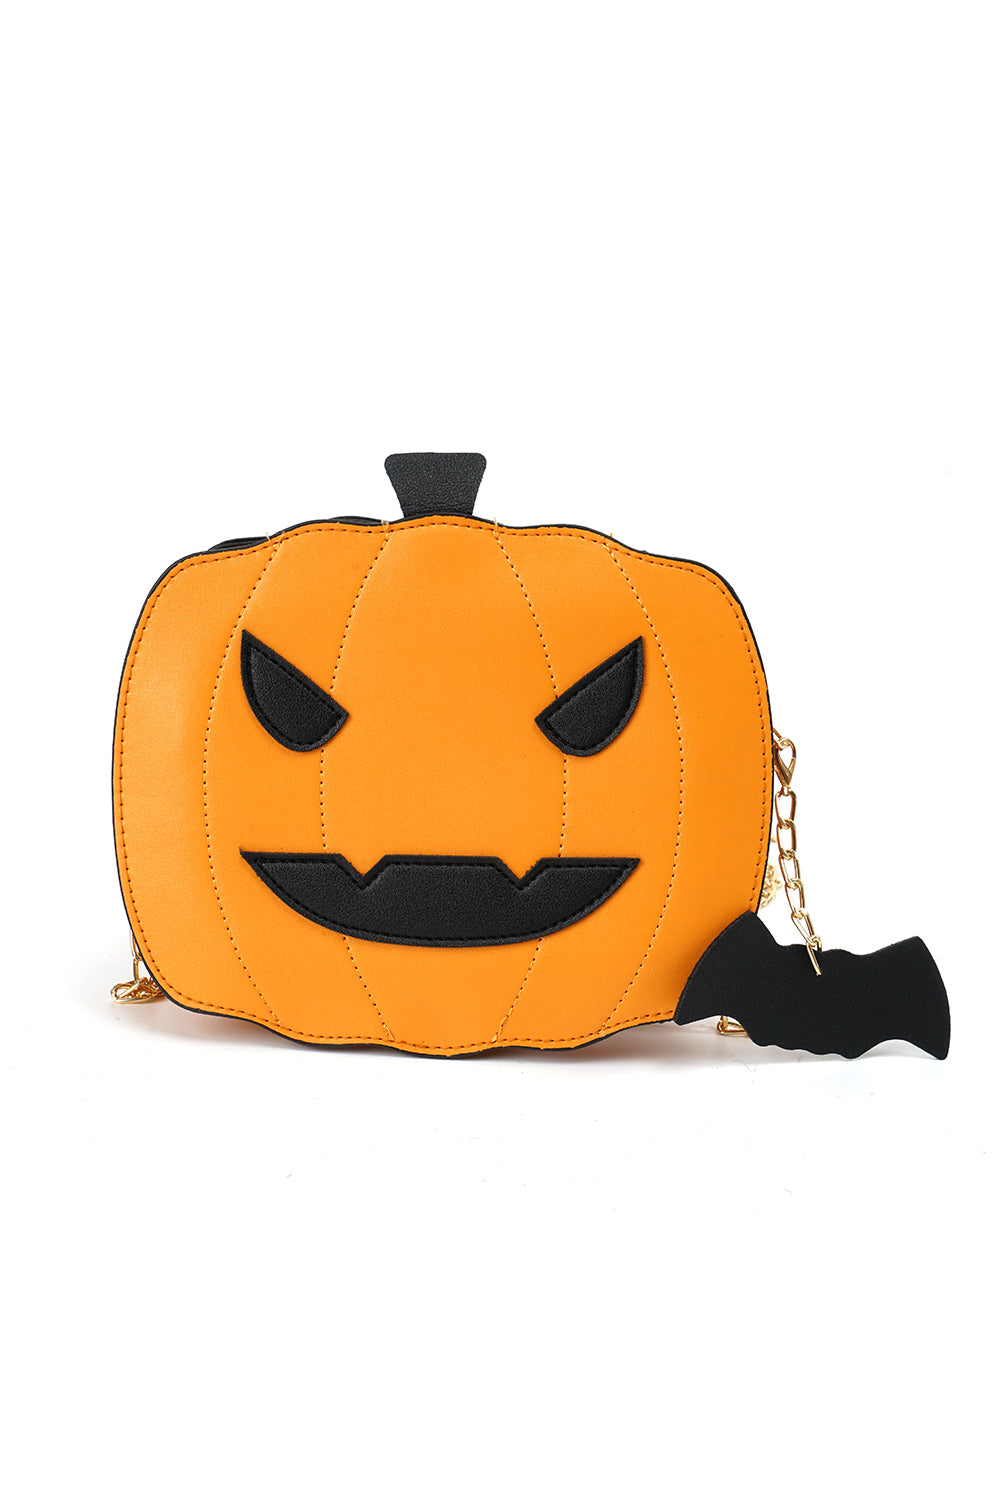 Funny Halloween Pumpkin Clutch